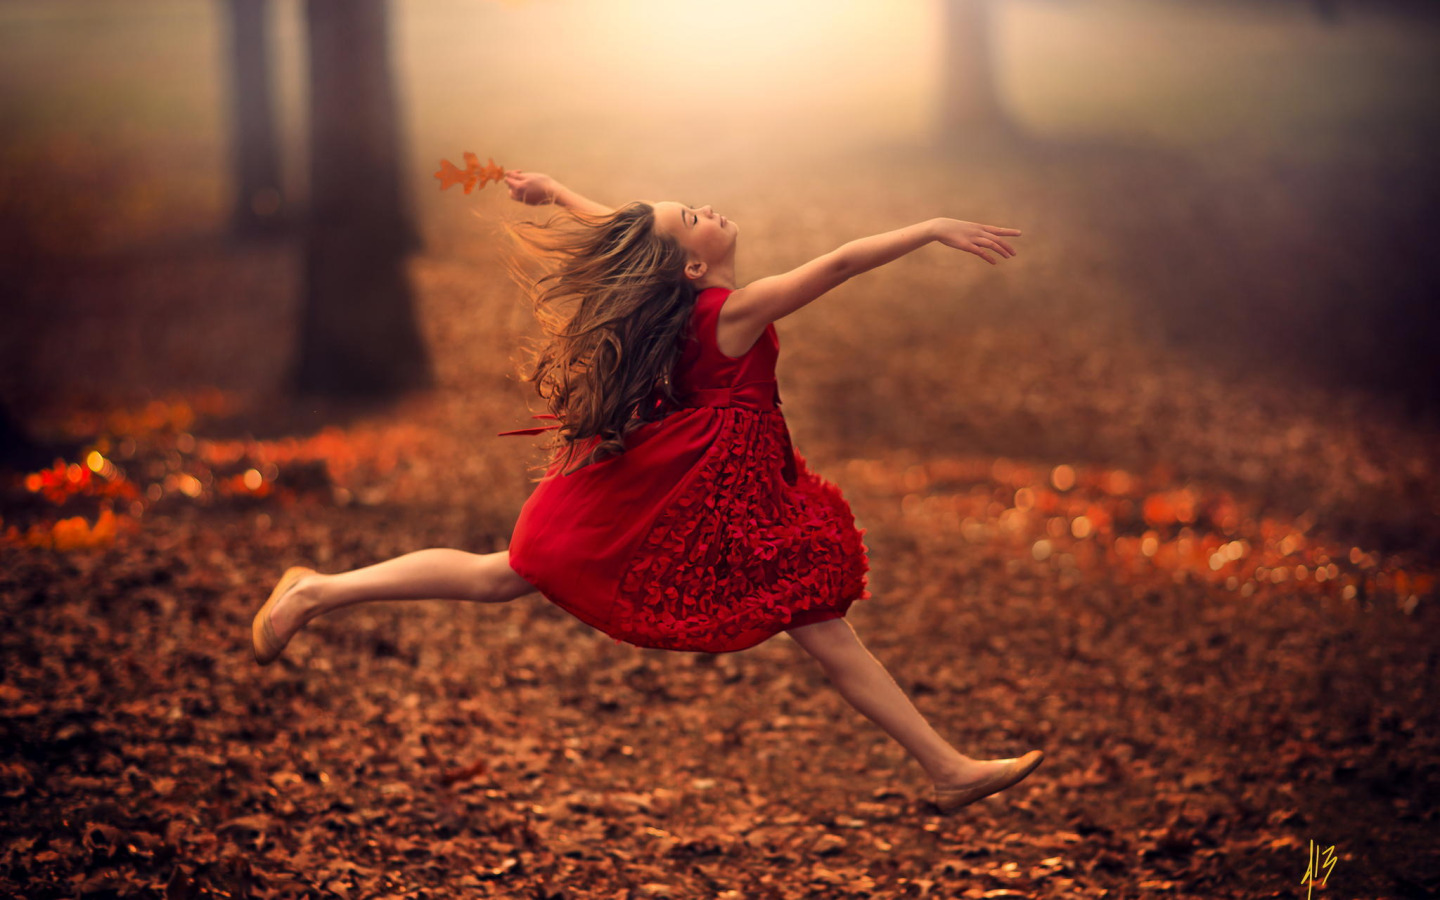 Танцевать плавно. Джейк Олсон (Jake Olson), США. Девушка танцует. Девушка бежит в платье. Девушка танцует осень.